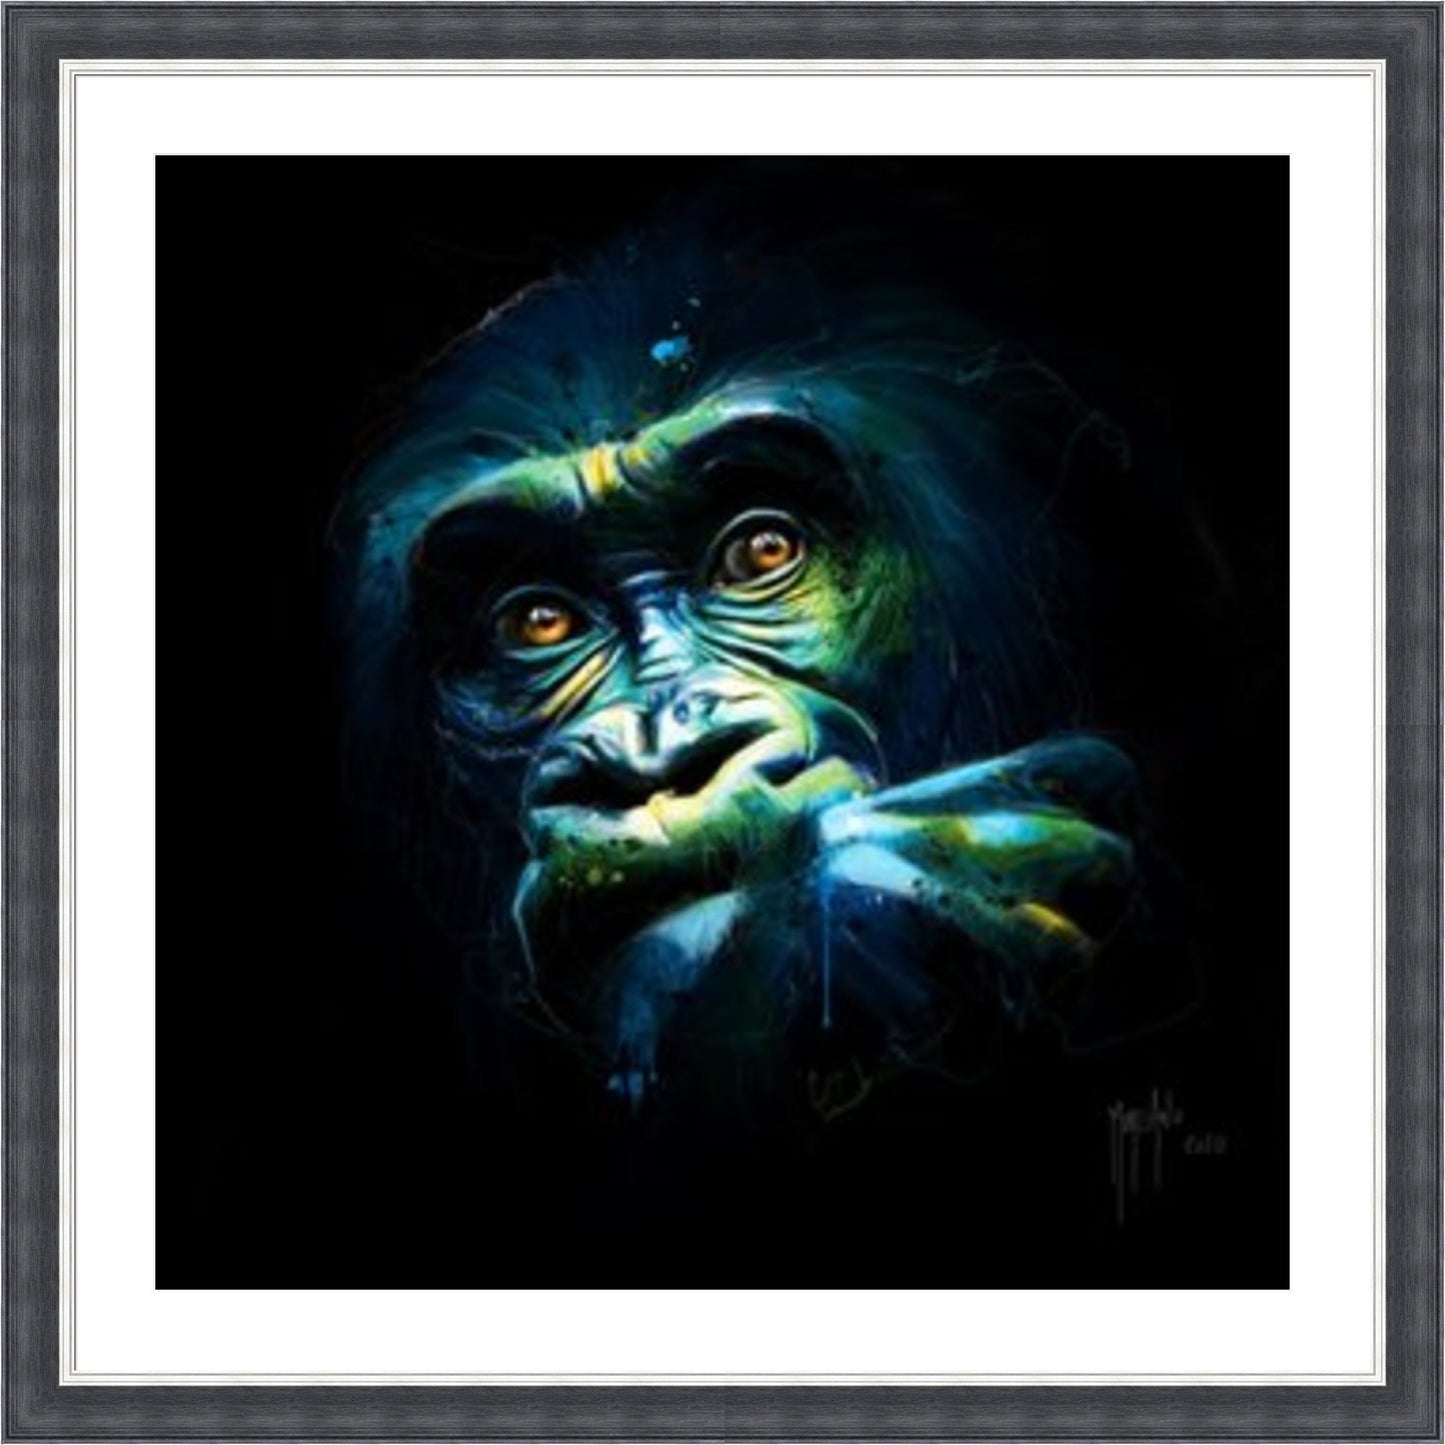 Black Kong (Gorilla) by Patrice Murciano